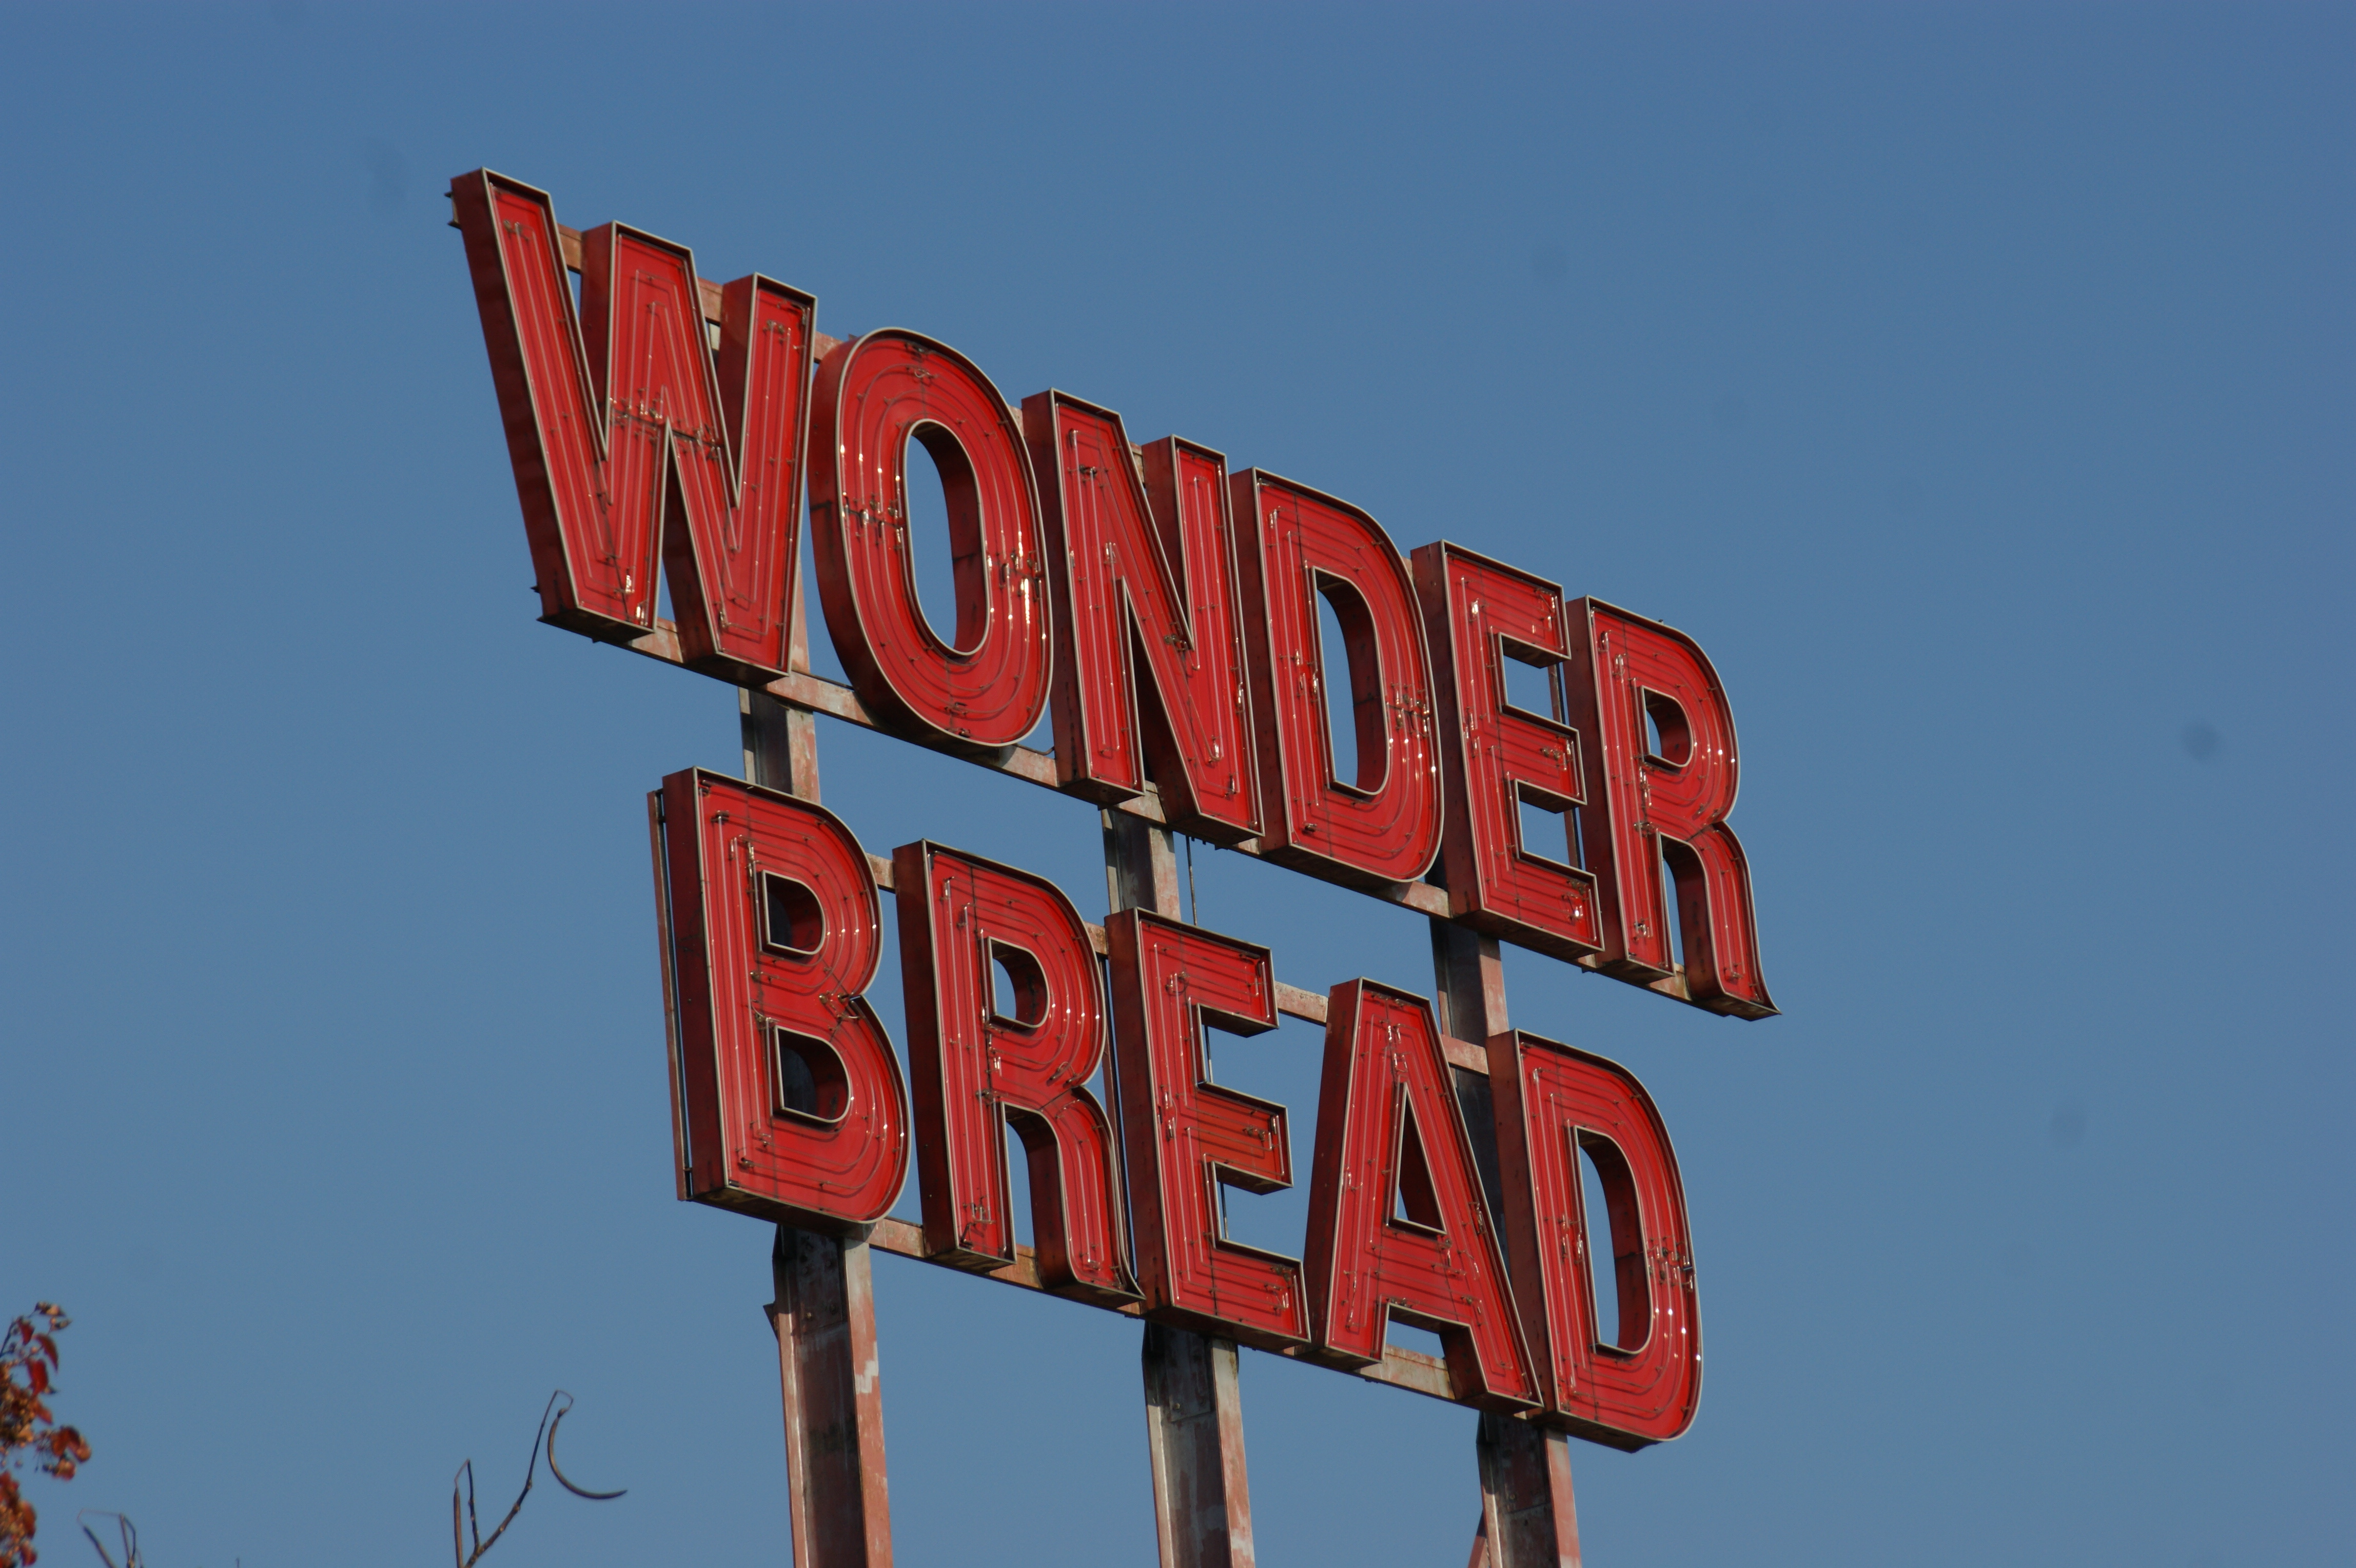 Wonder Bread Factory